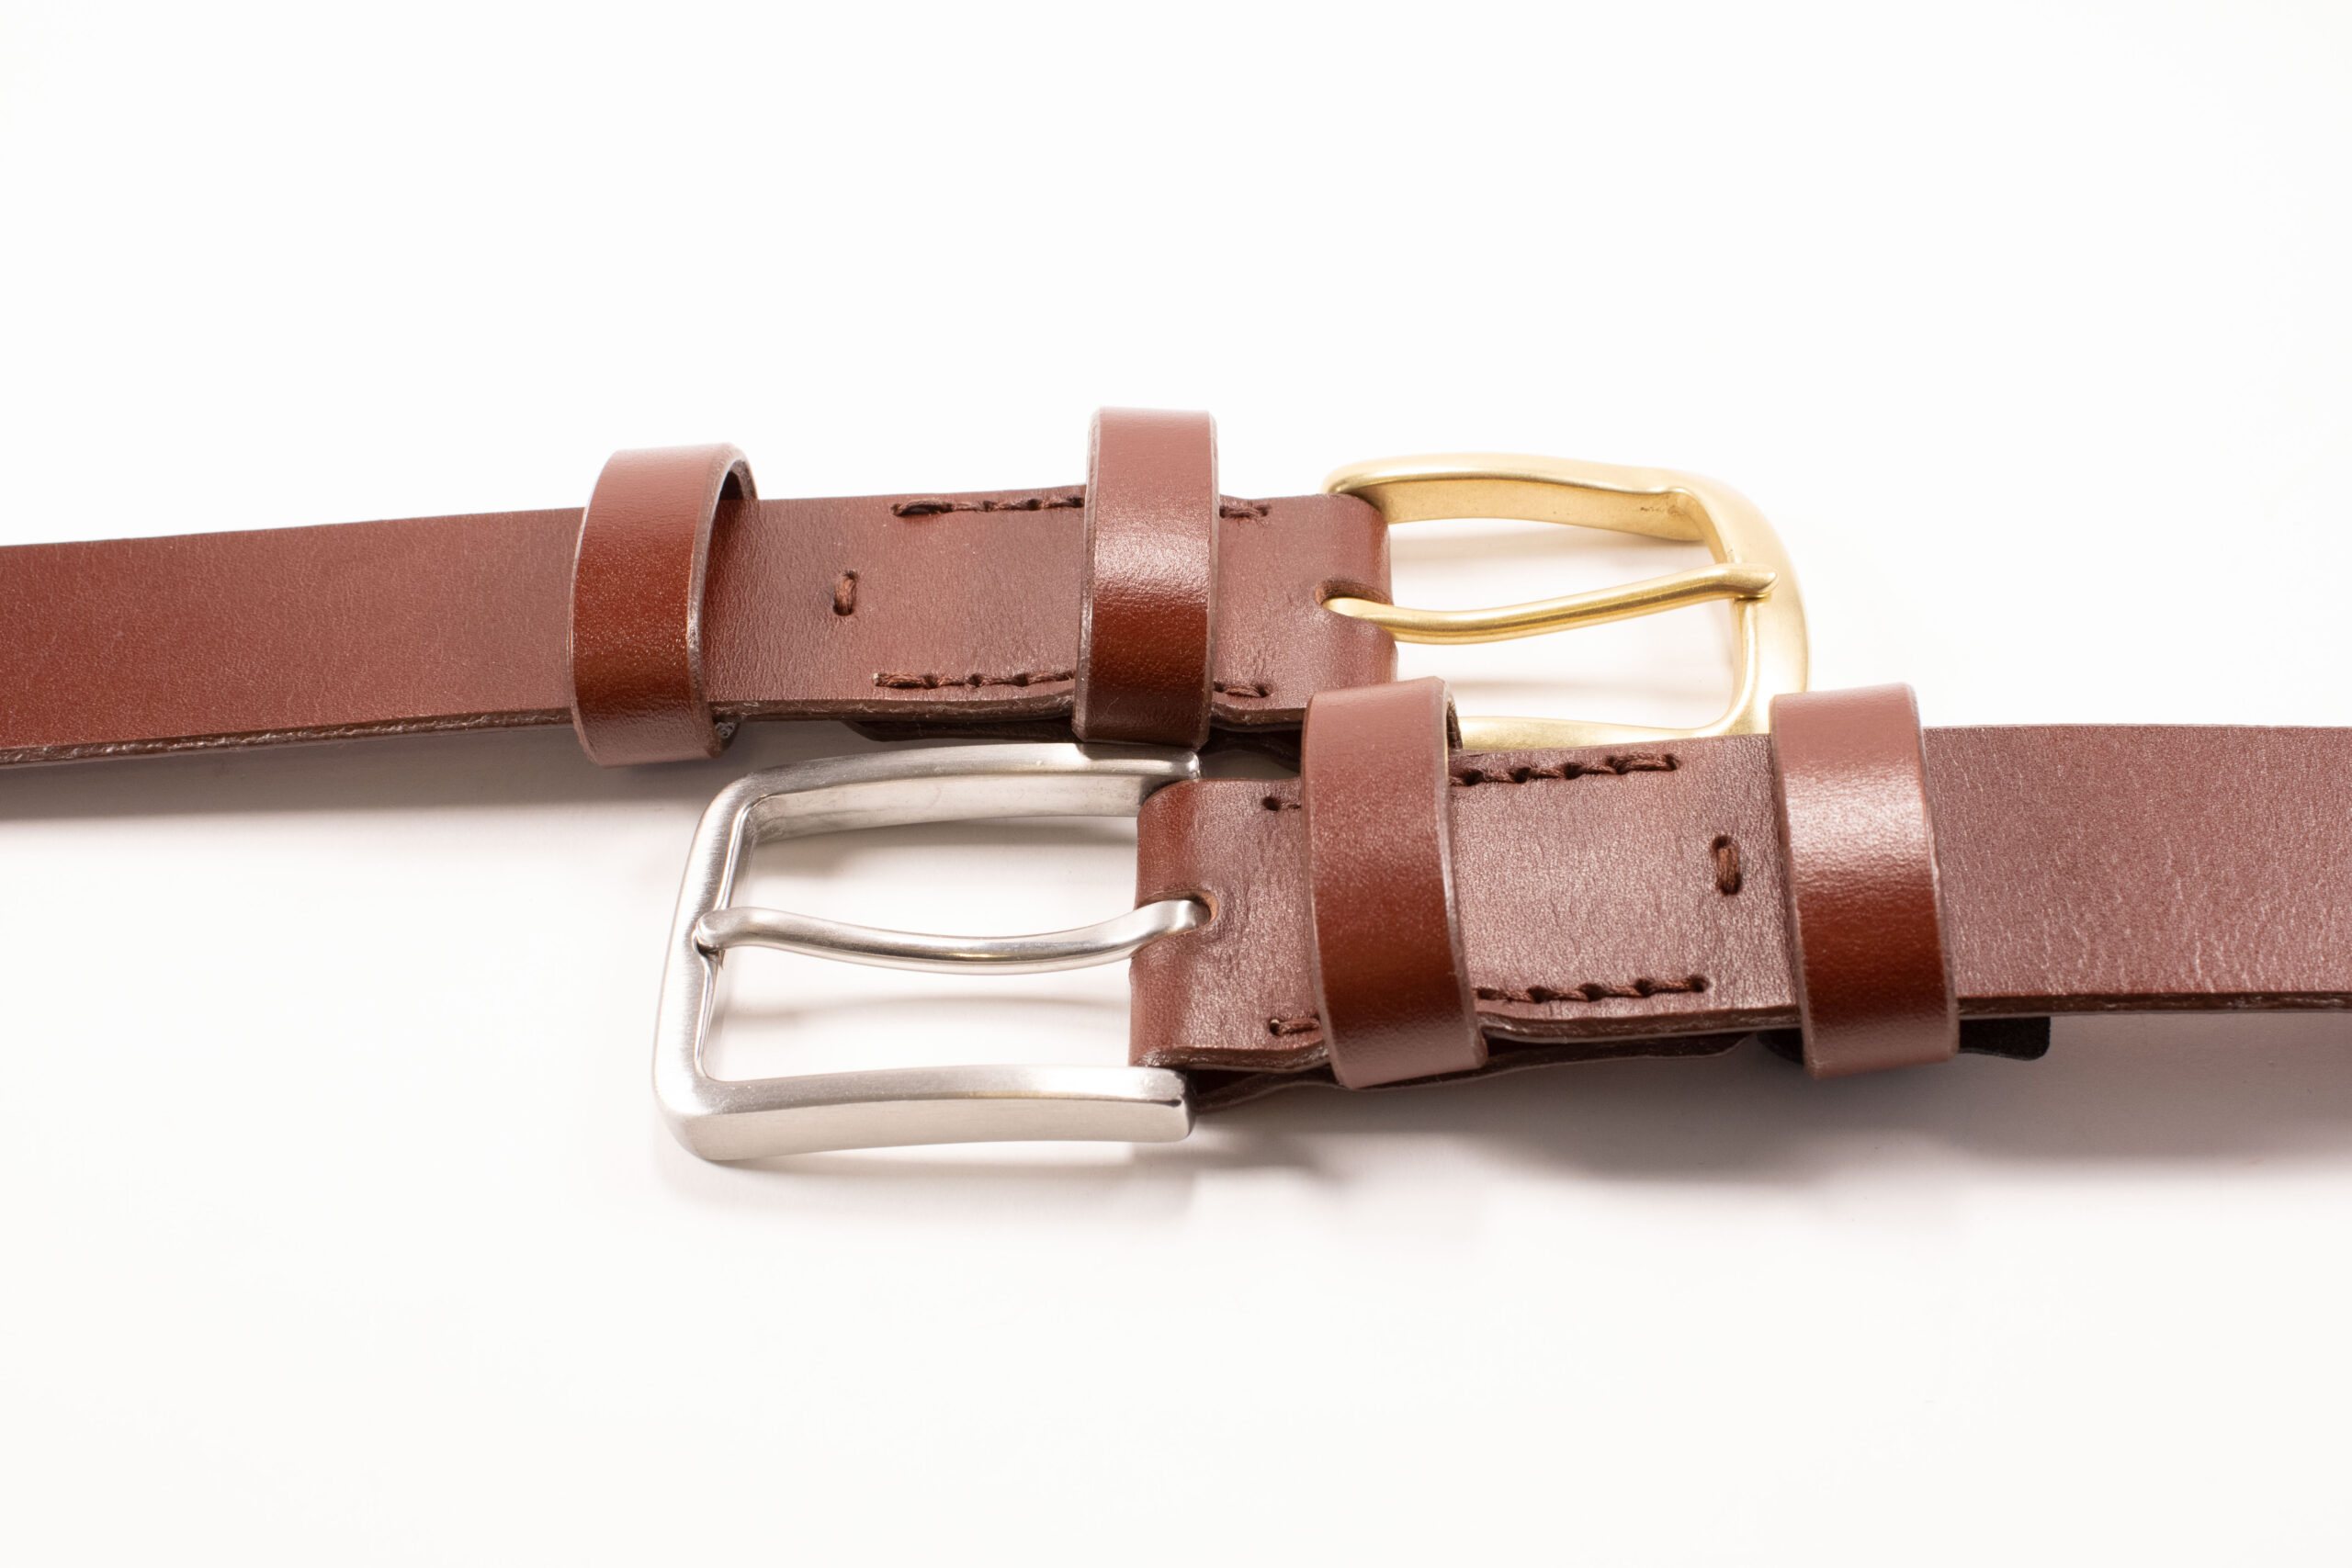 Mark Fred Mens Belt - Leather Dress Belts for Men - Handmade Tan